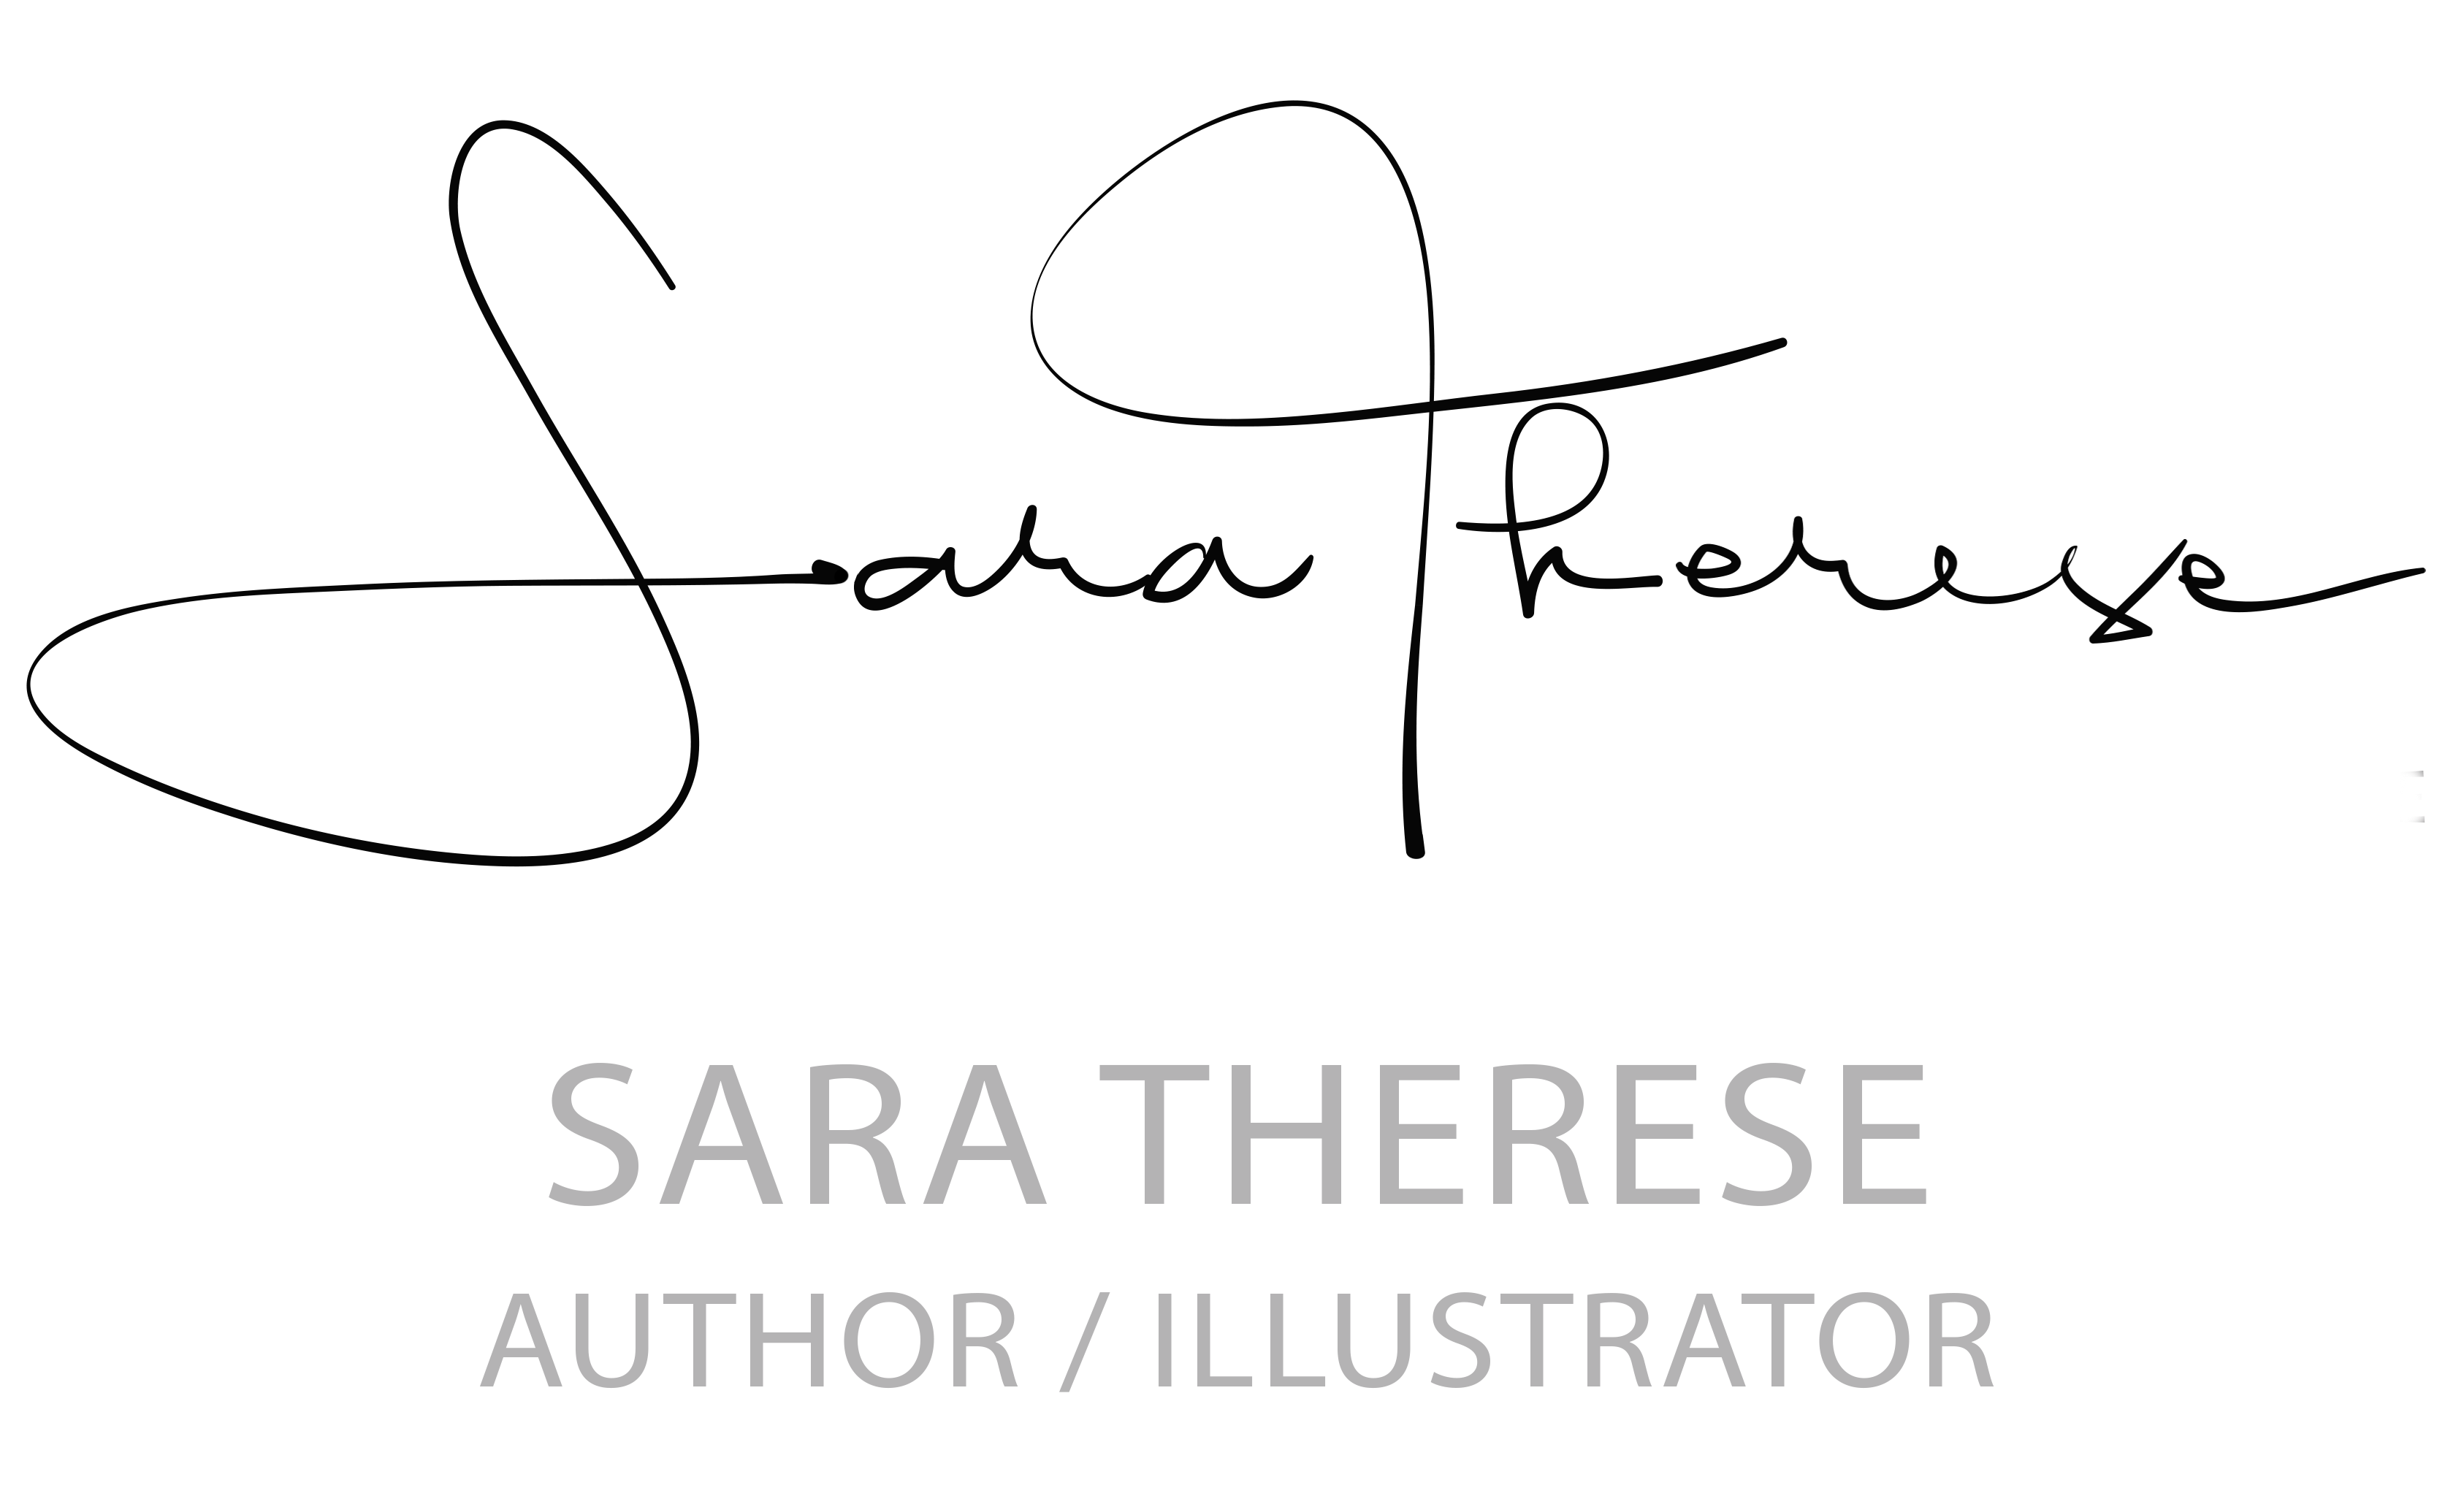 Sara Therese Durfee